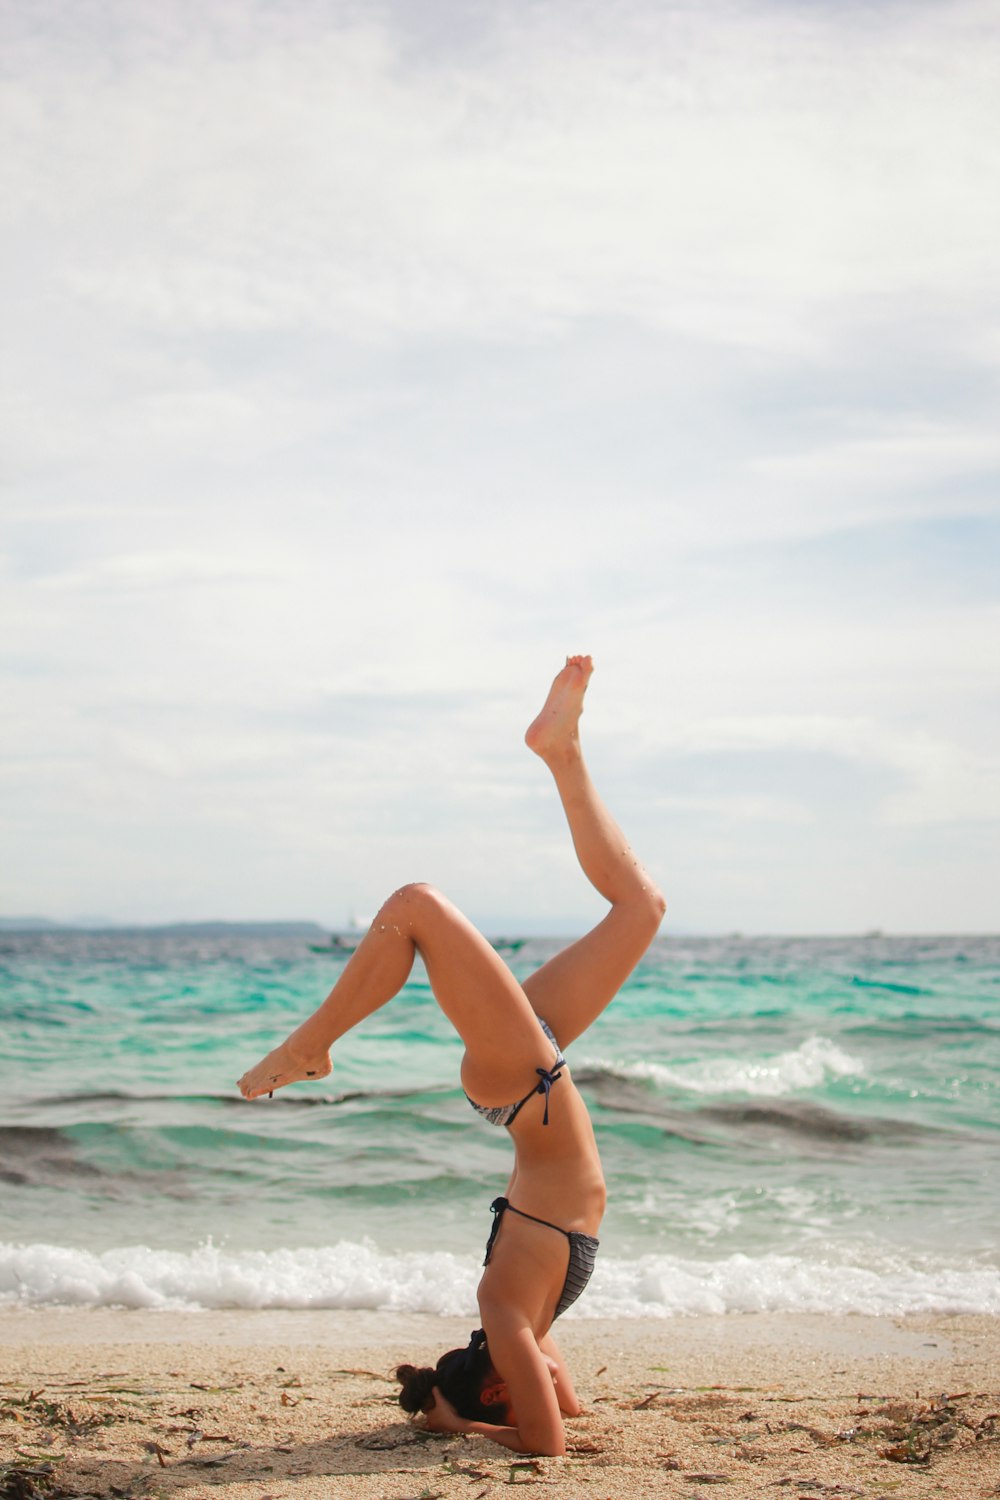 a woman doing a handstand on a beach